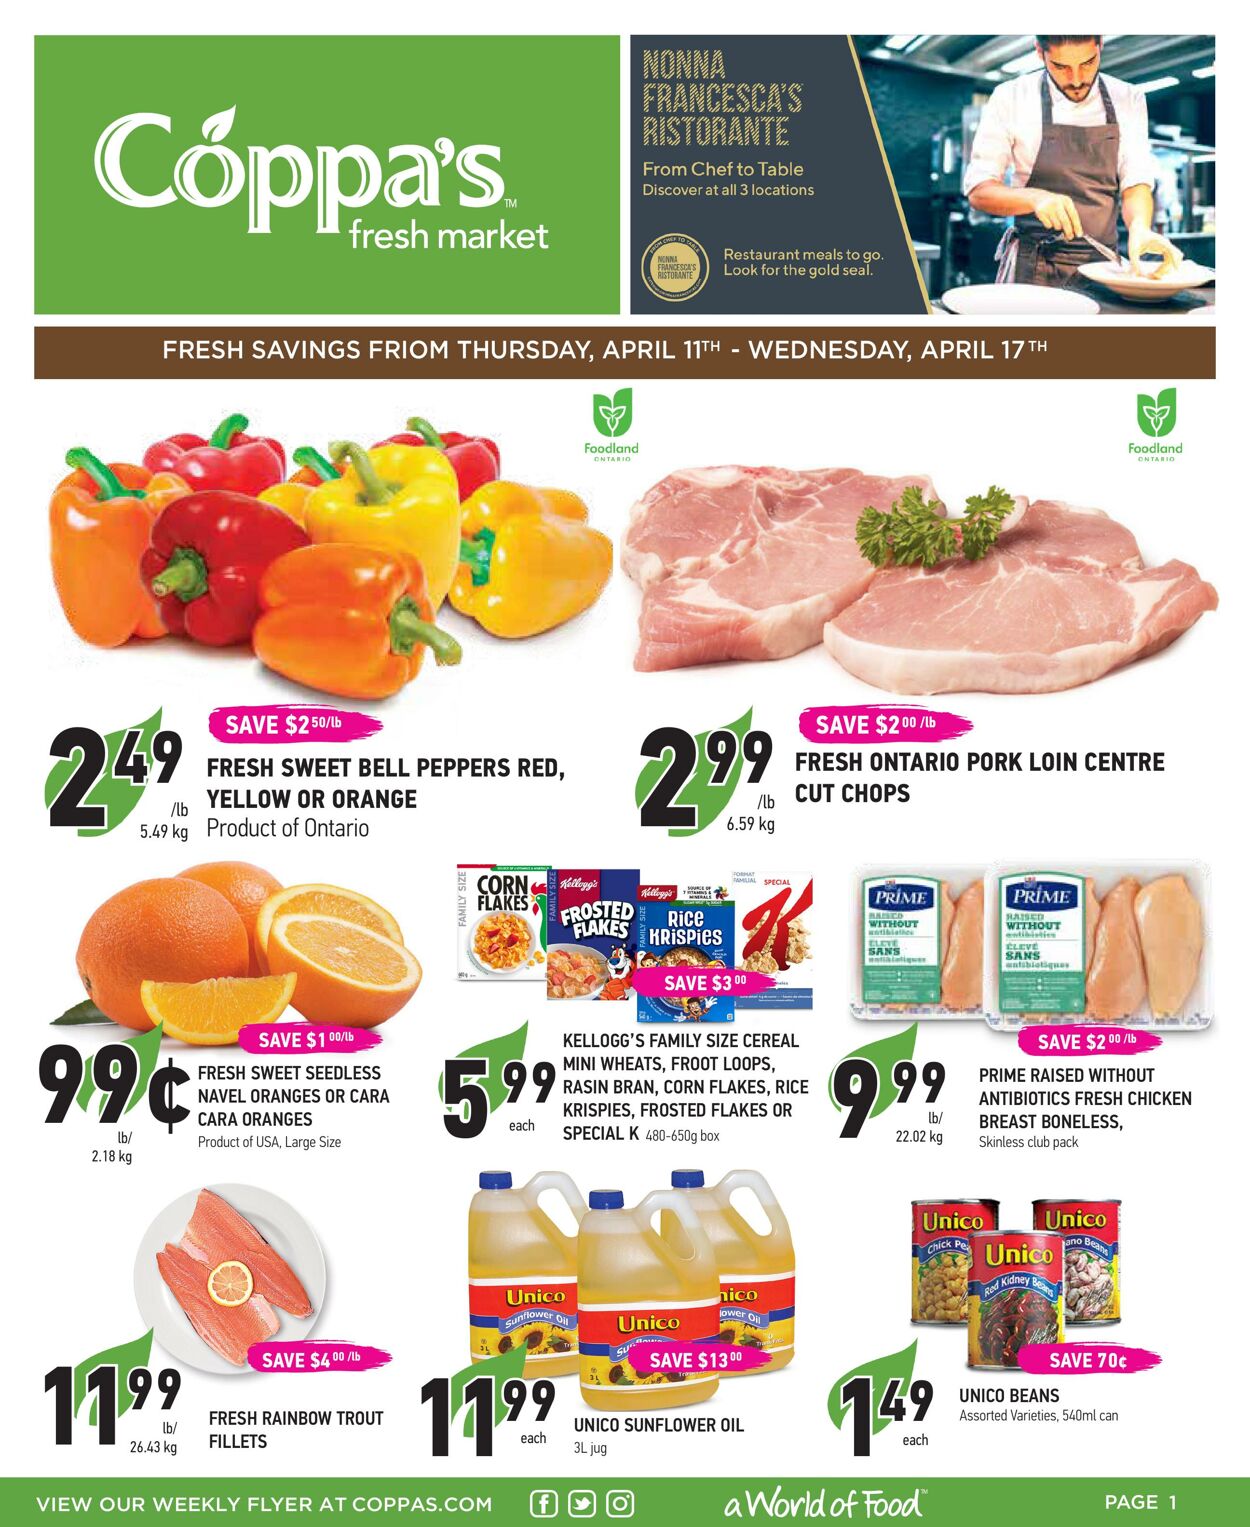 Coppa's Fresh Market Promotional flyers